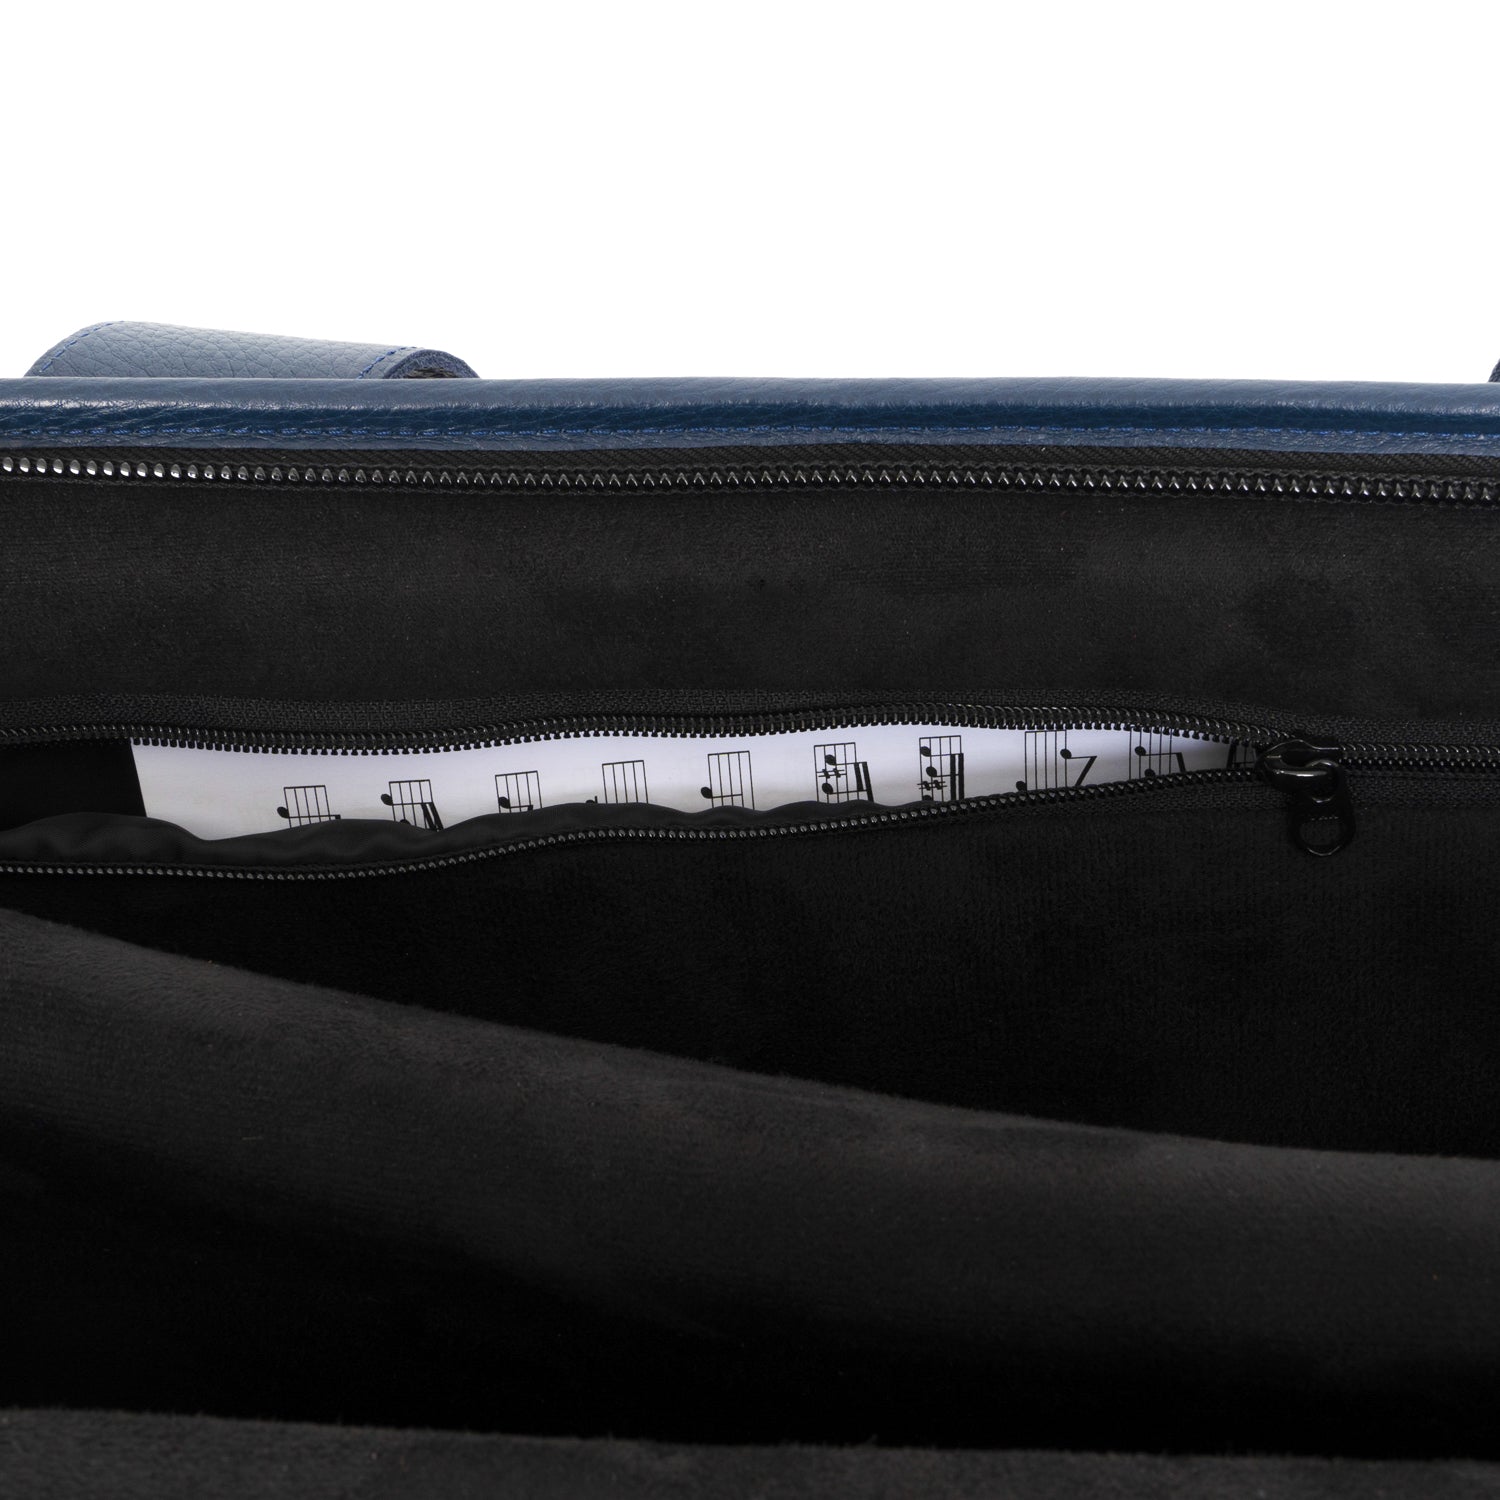 Triple or Double Trumpet/Flugelhorn Gig Bag with UK flag in Flotar Leather